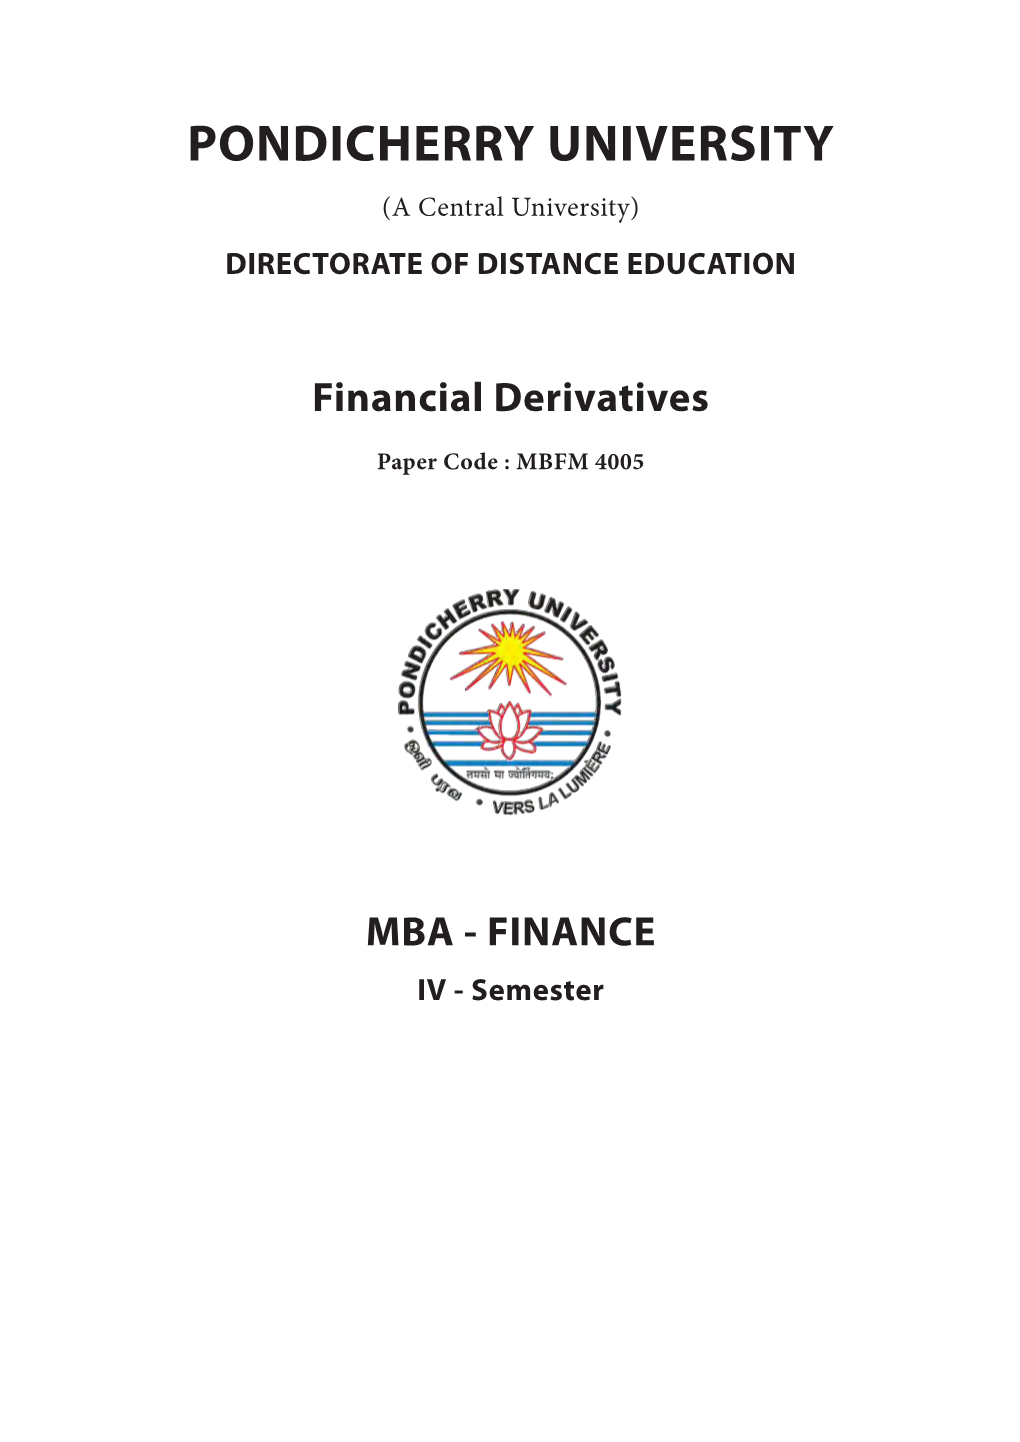 Financial Derivatives